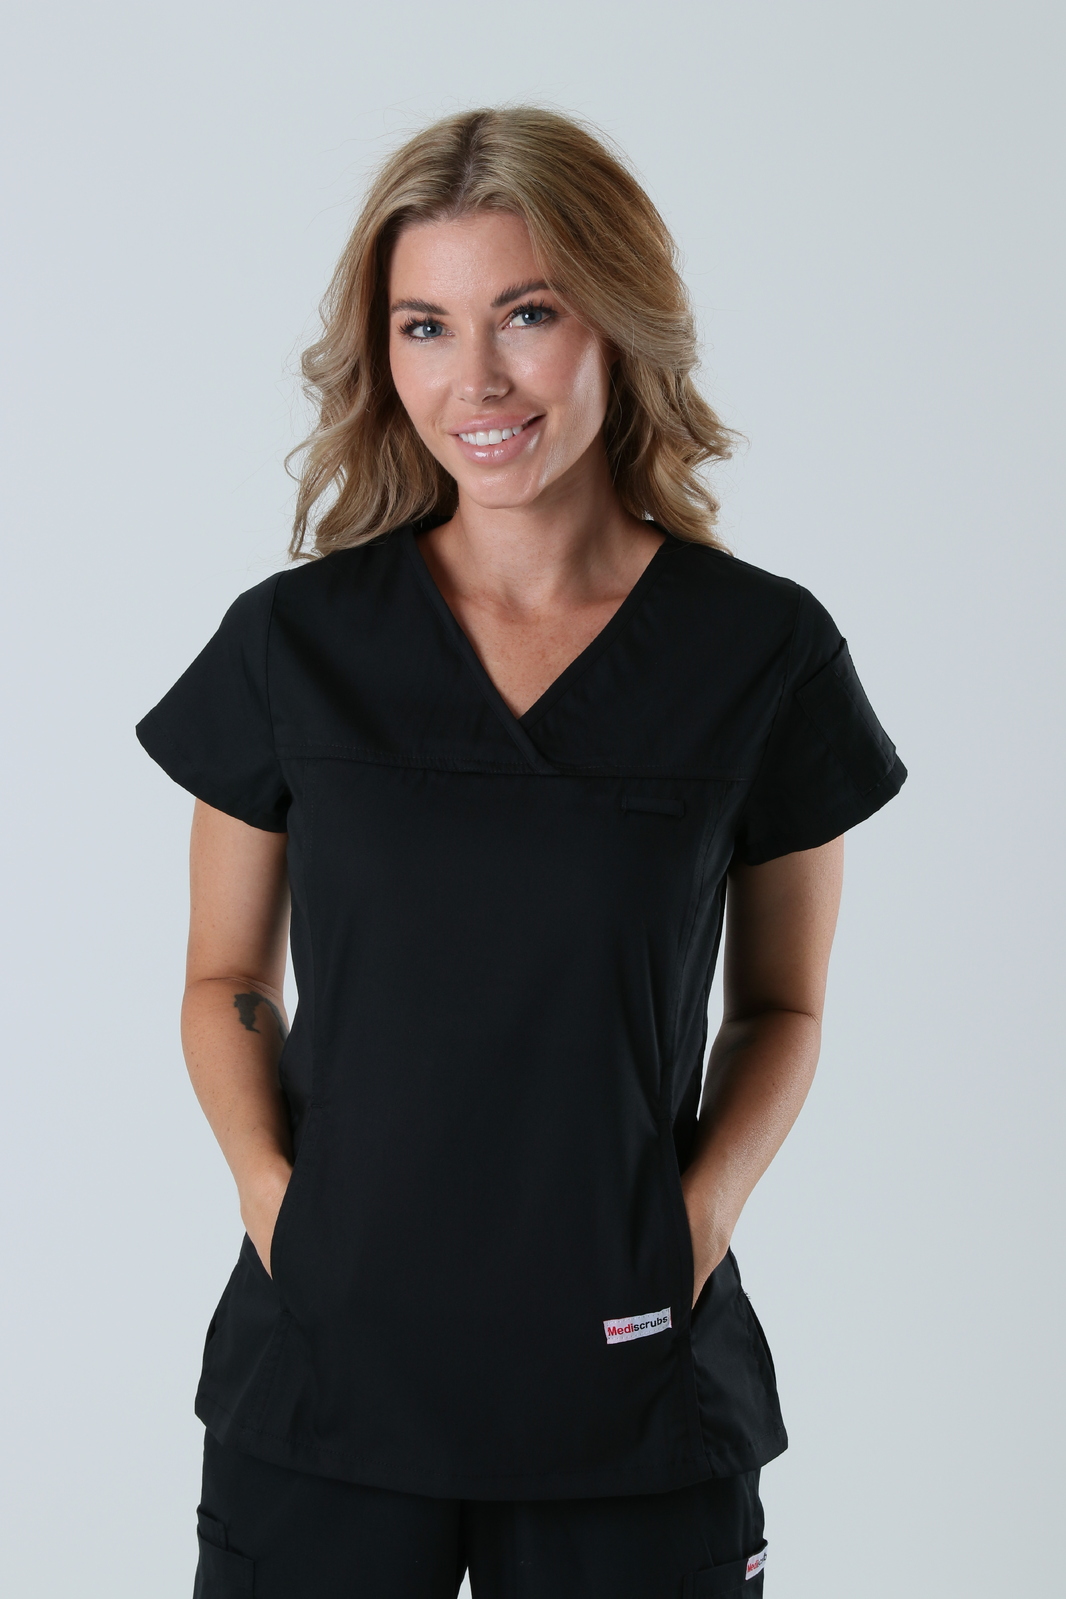 Queensland Children's Hospital Emergency Department Nurse Unit Manager Uniform Top Bundle  (Women's Fit Top in Black incl Logos)